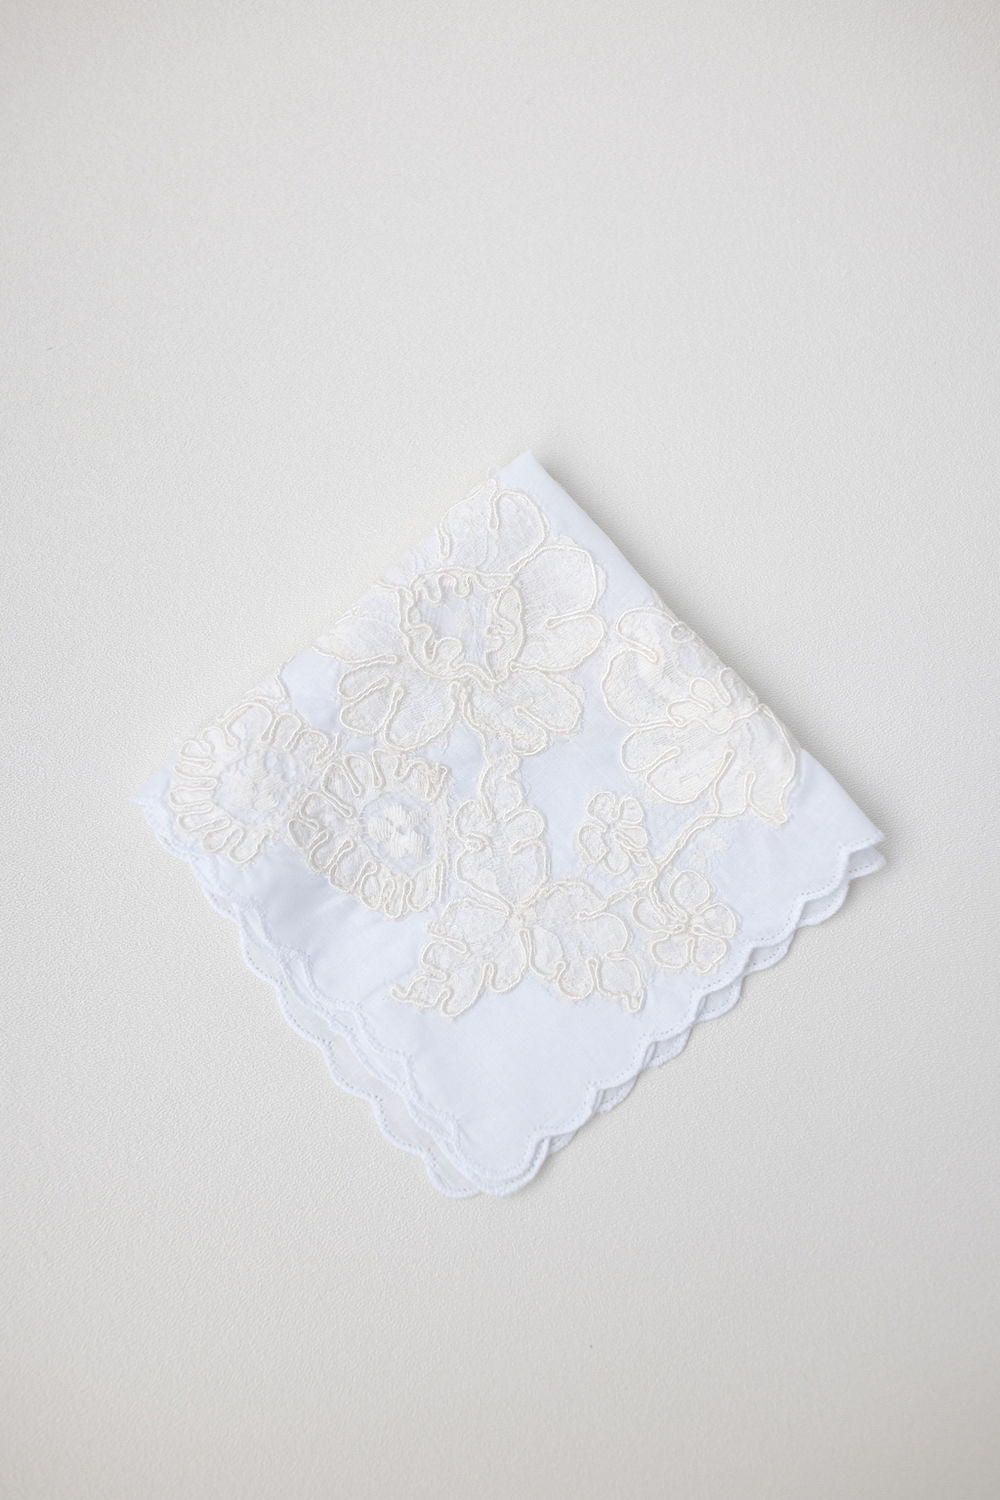 lace wedding handkerchief accessory heirloom handmade from mom's wedding dress by The Garter Girl